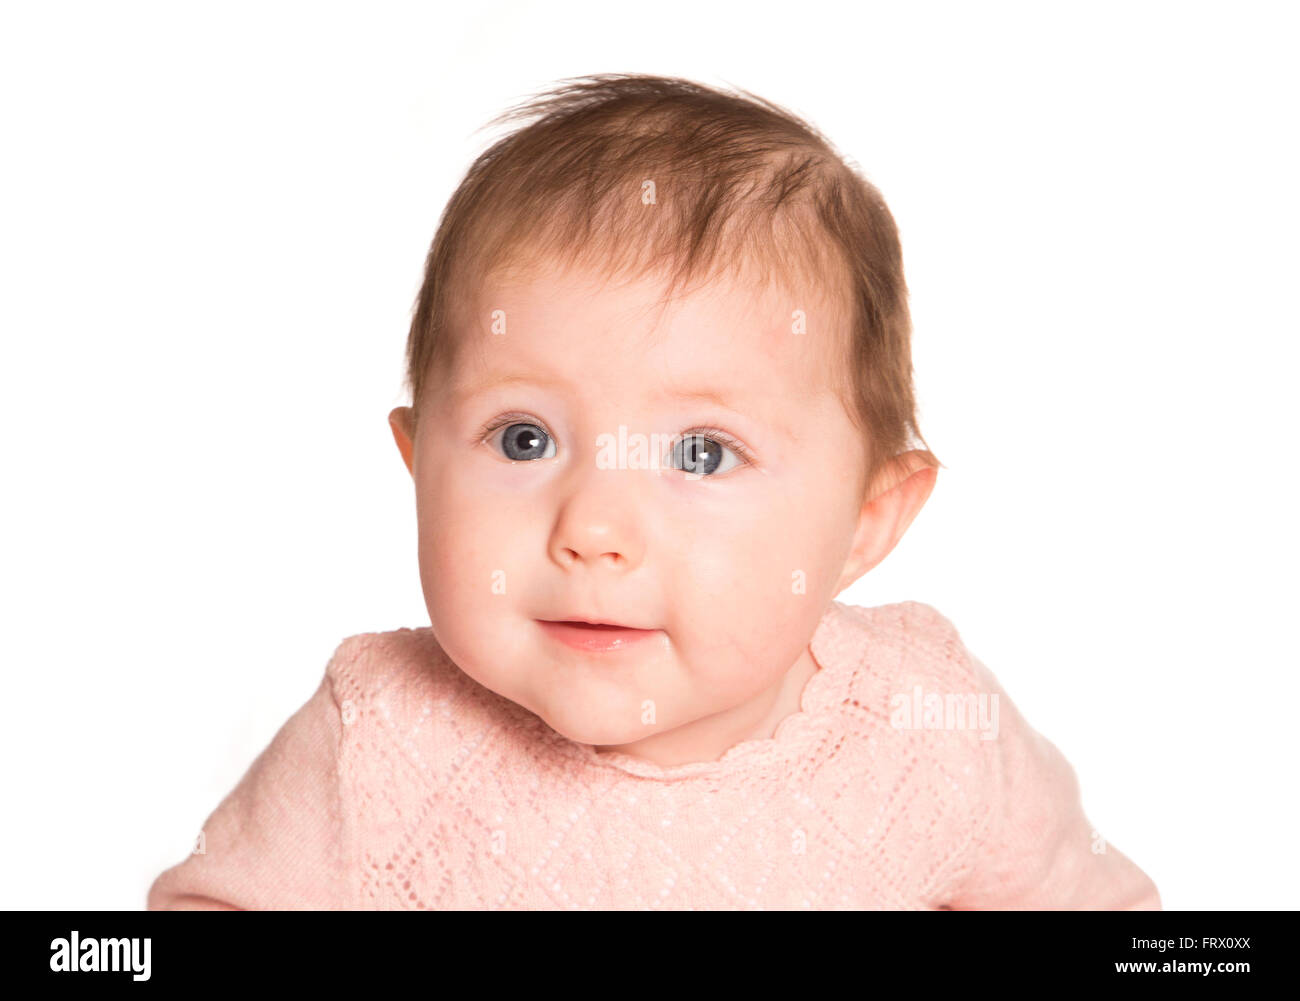 baby girl portrait on white background Stock Photo